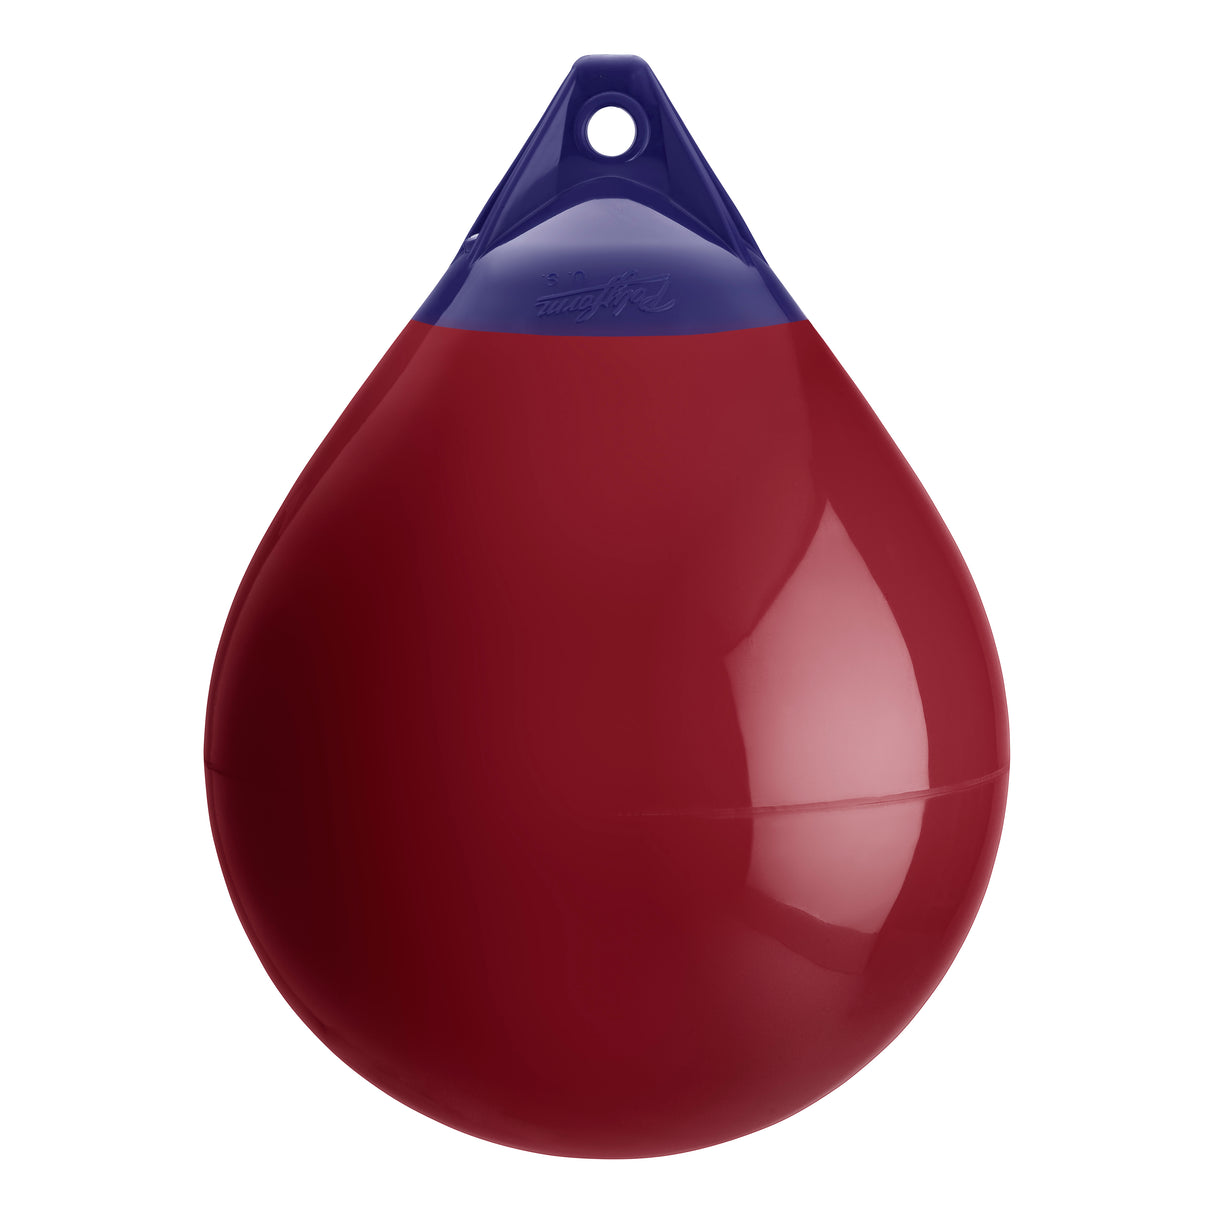 Burgundy inflatable buoy, Polyform A-4 